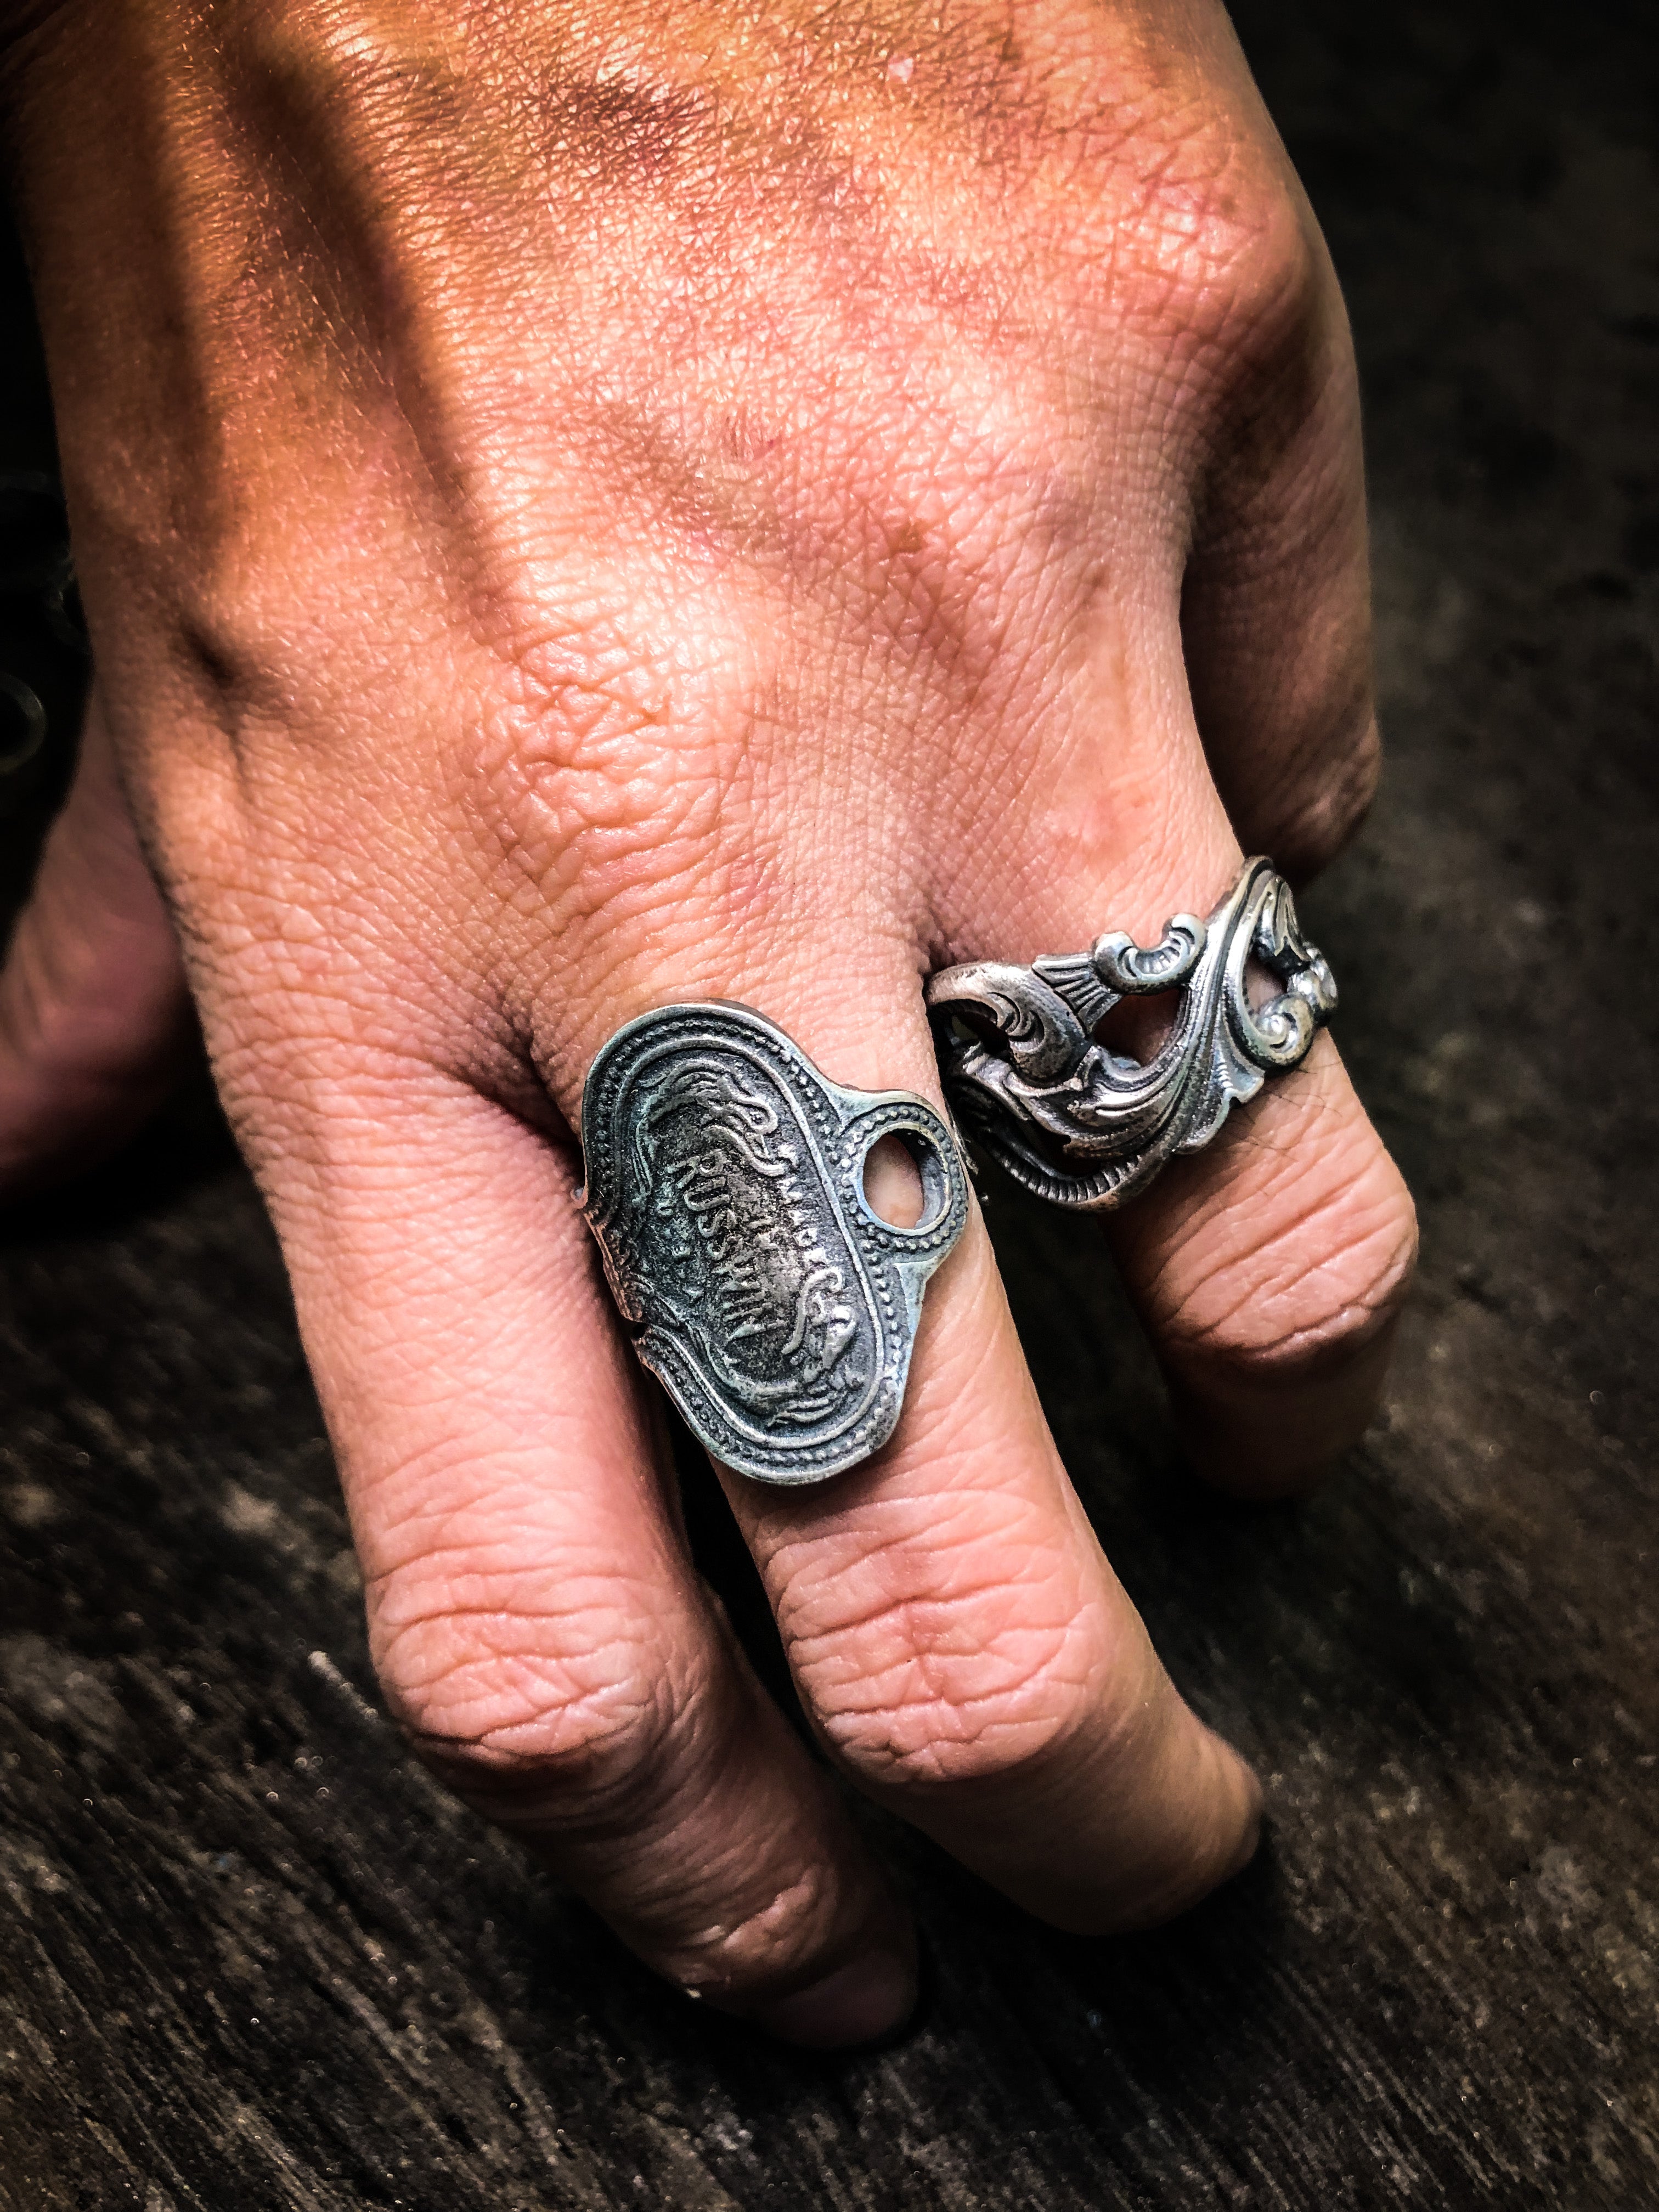 Vintage Silver Key Ring (Russwin)